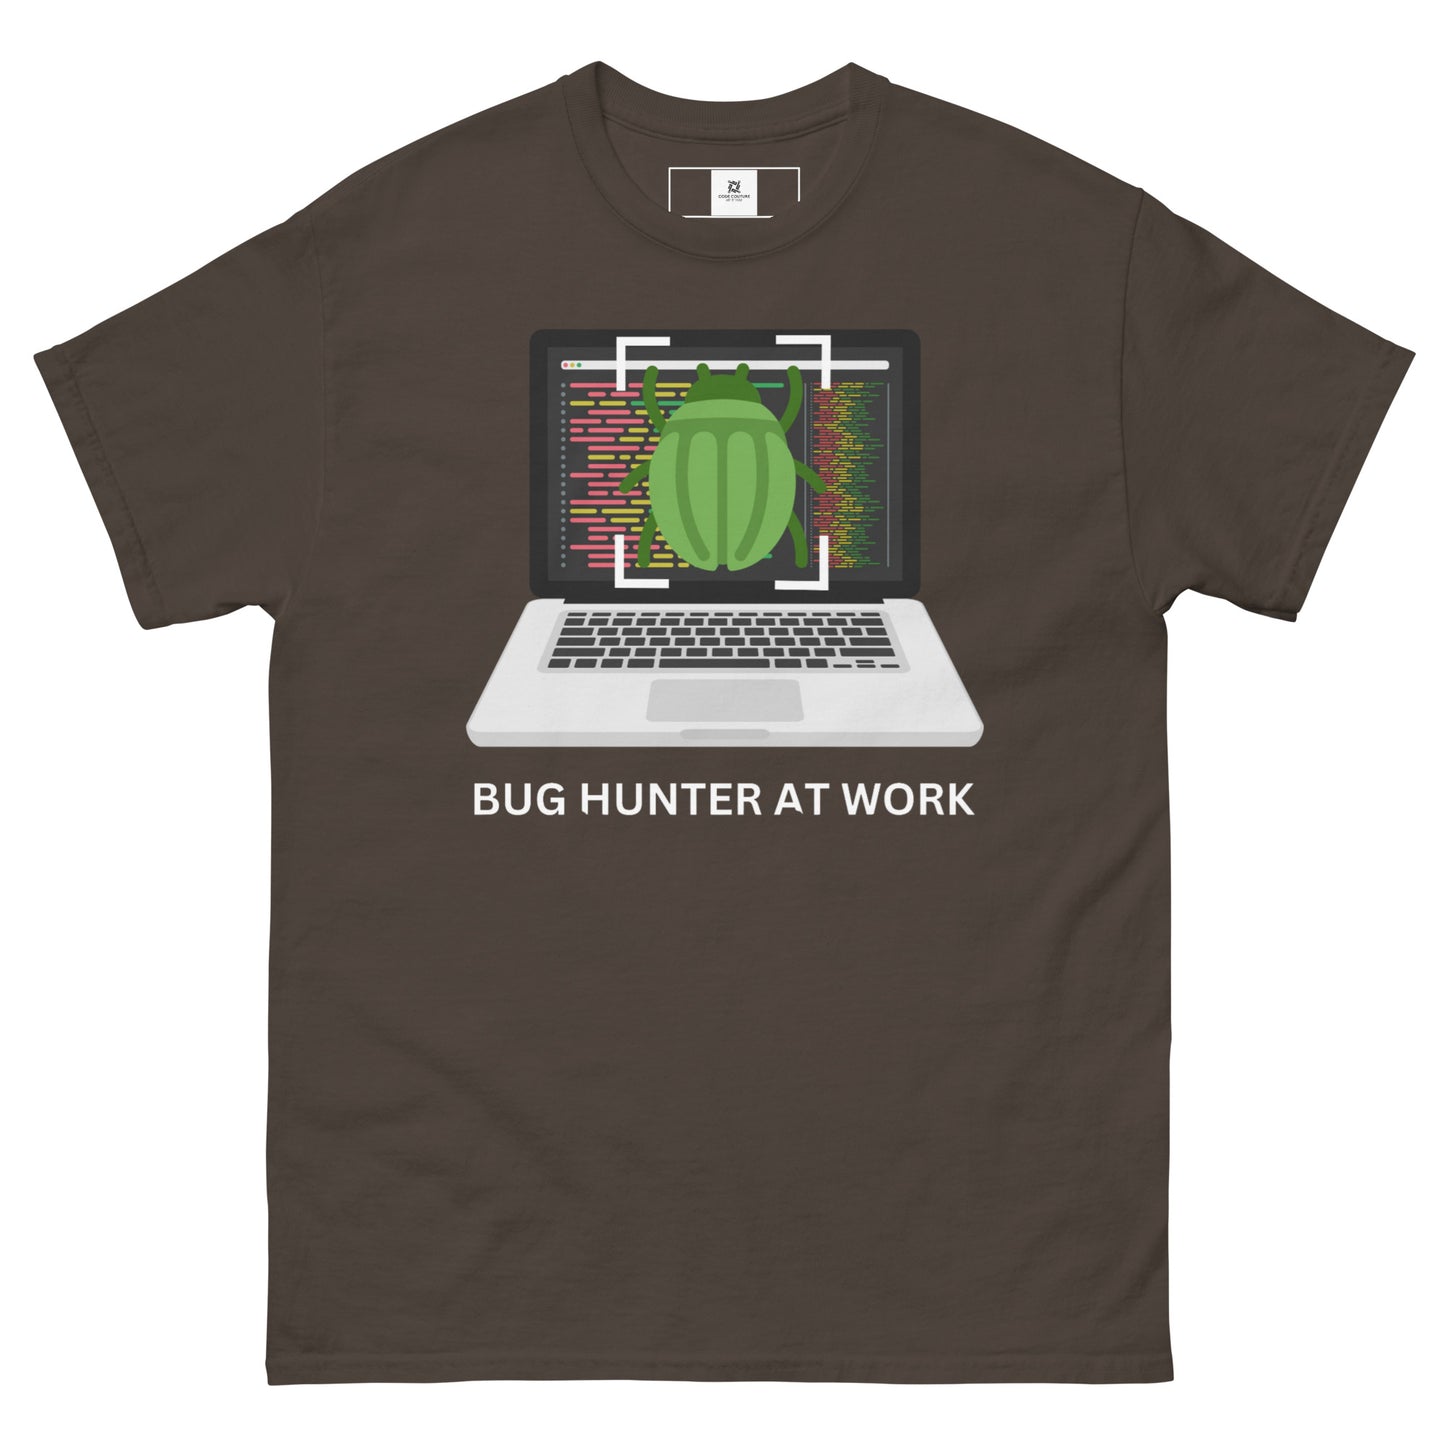 Bug Hunter at Work - Dark